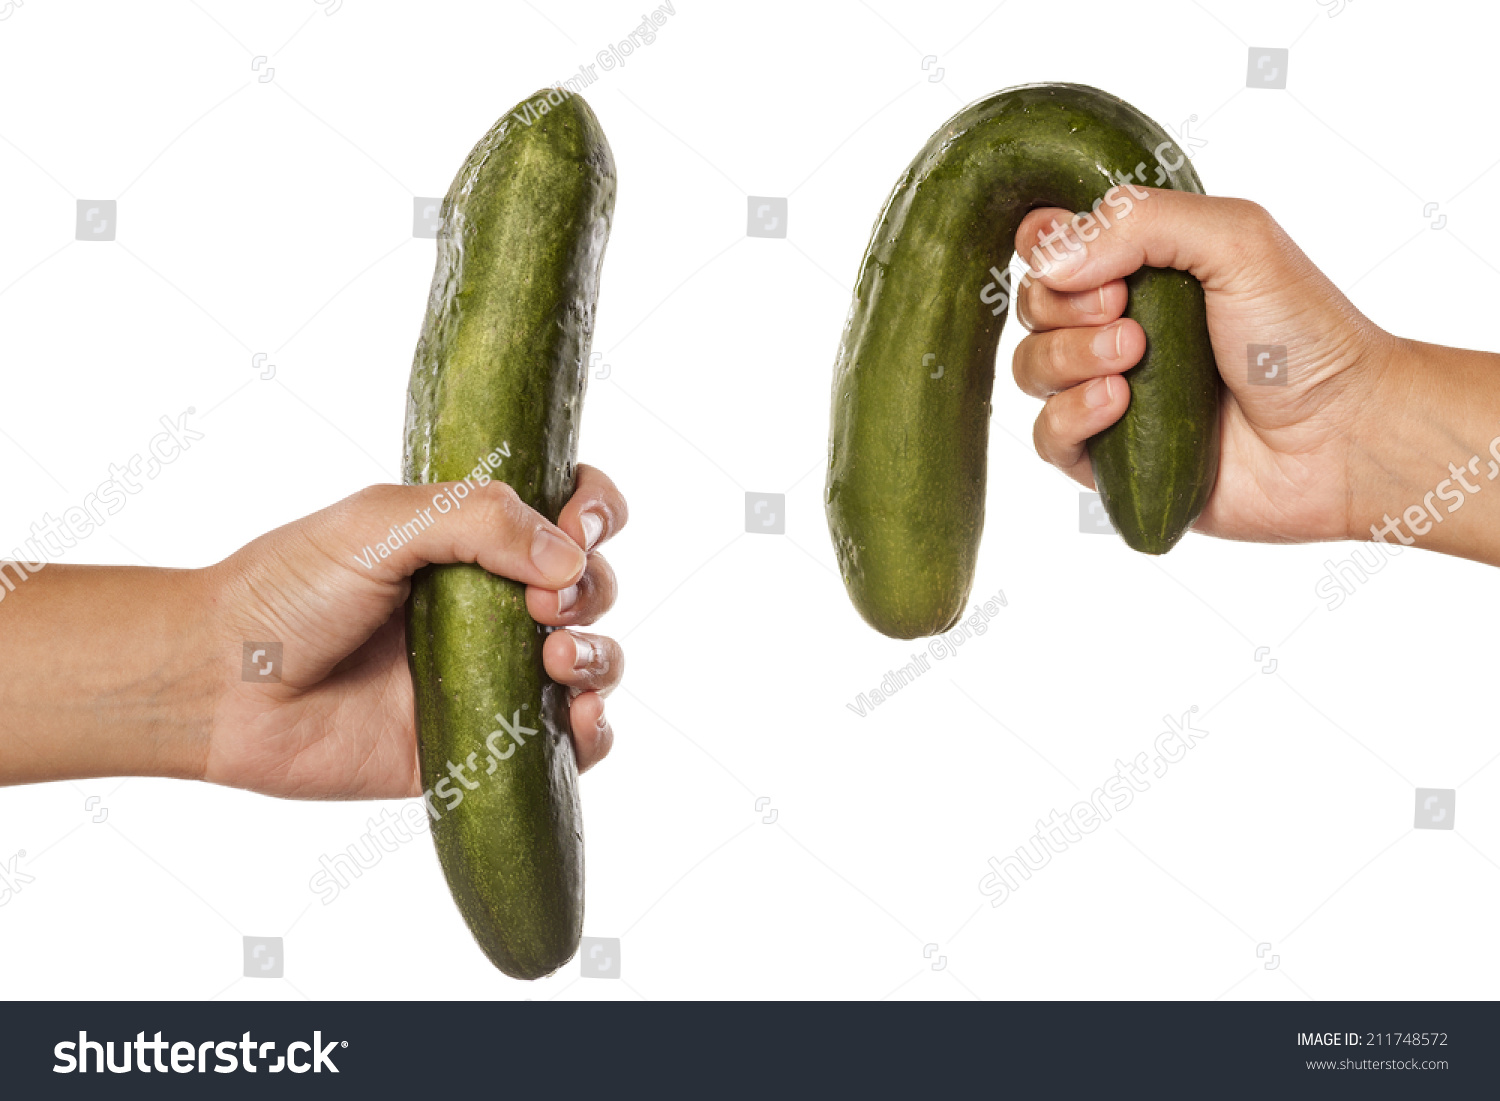 Cucumber For Sex 48